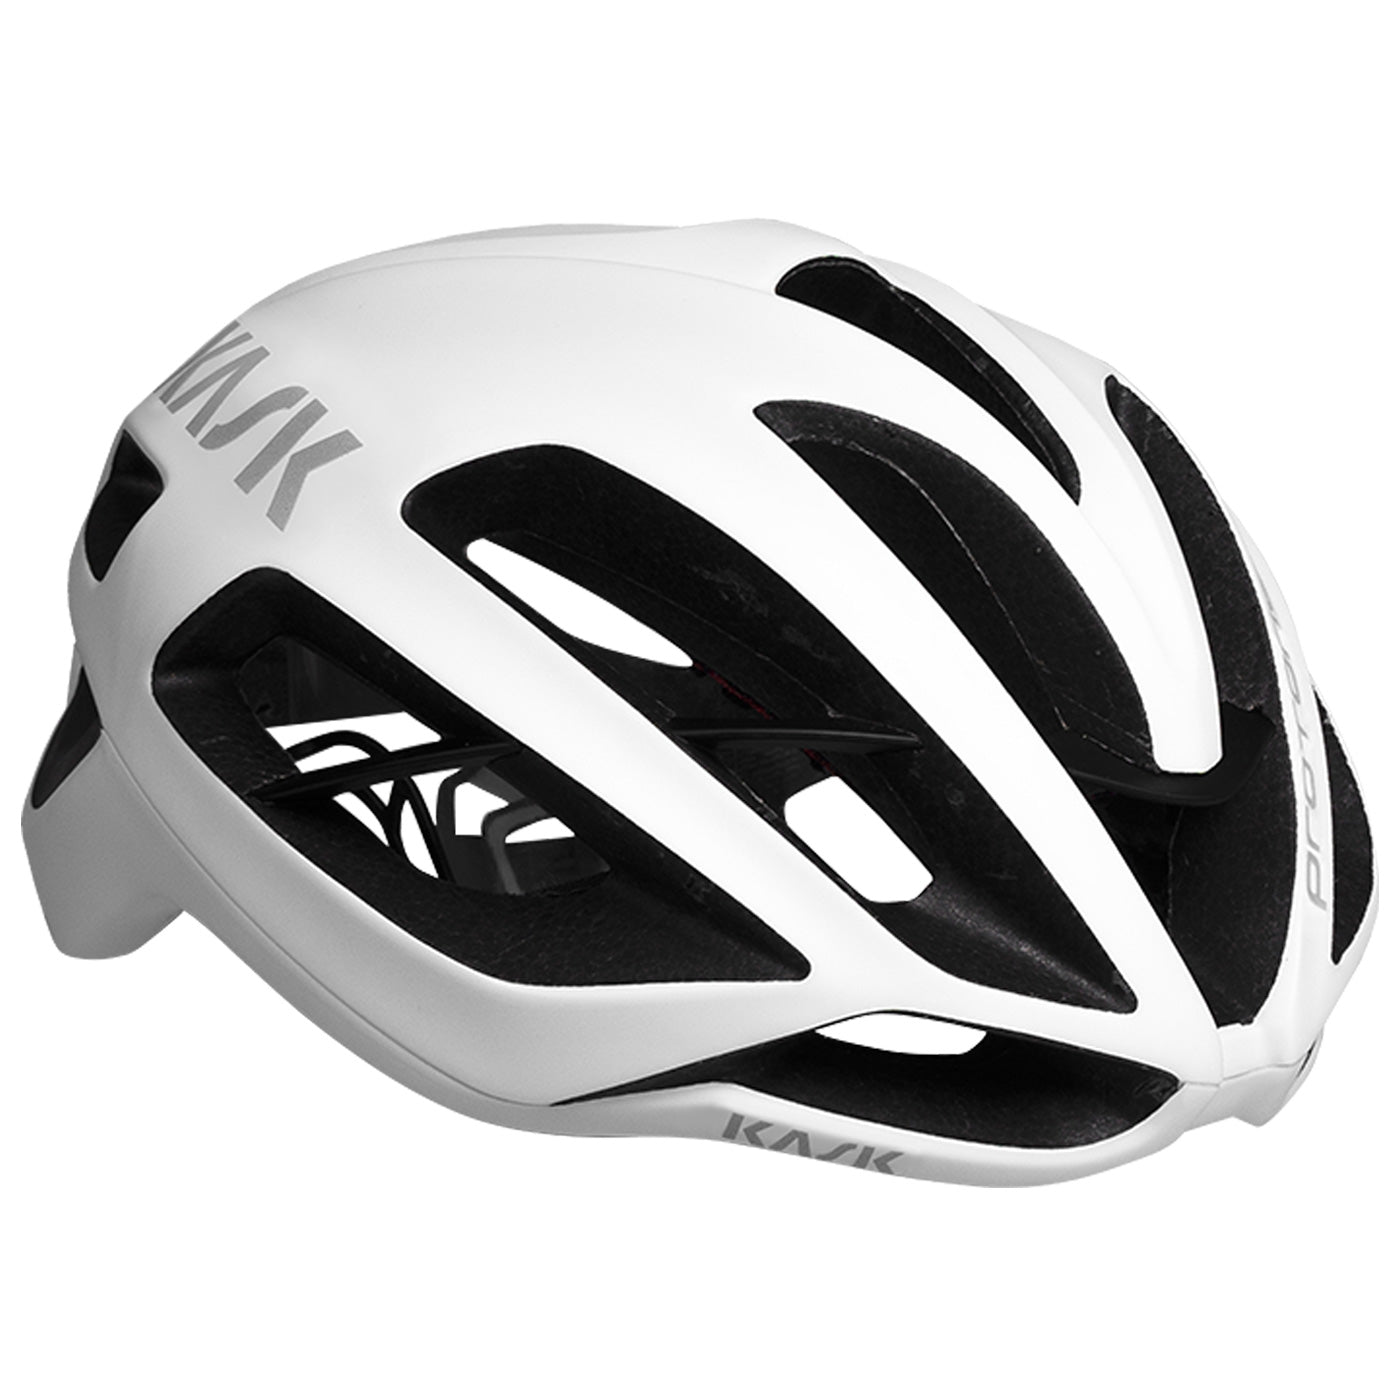 Kask Protone WG11 helmet - Matte white | All4cycling